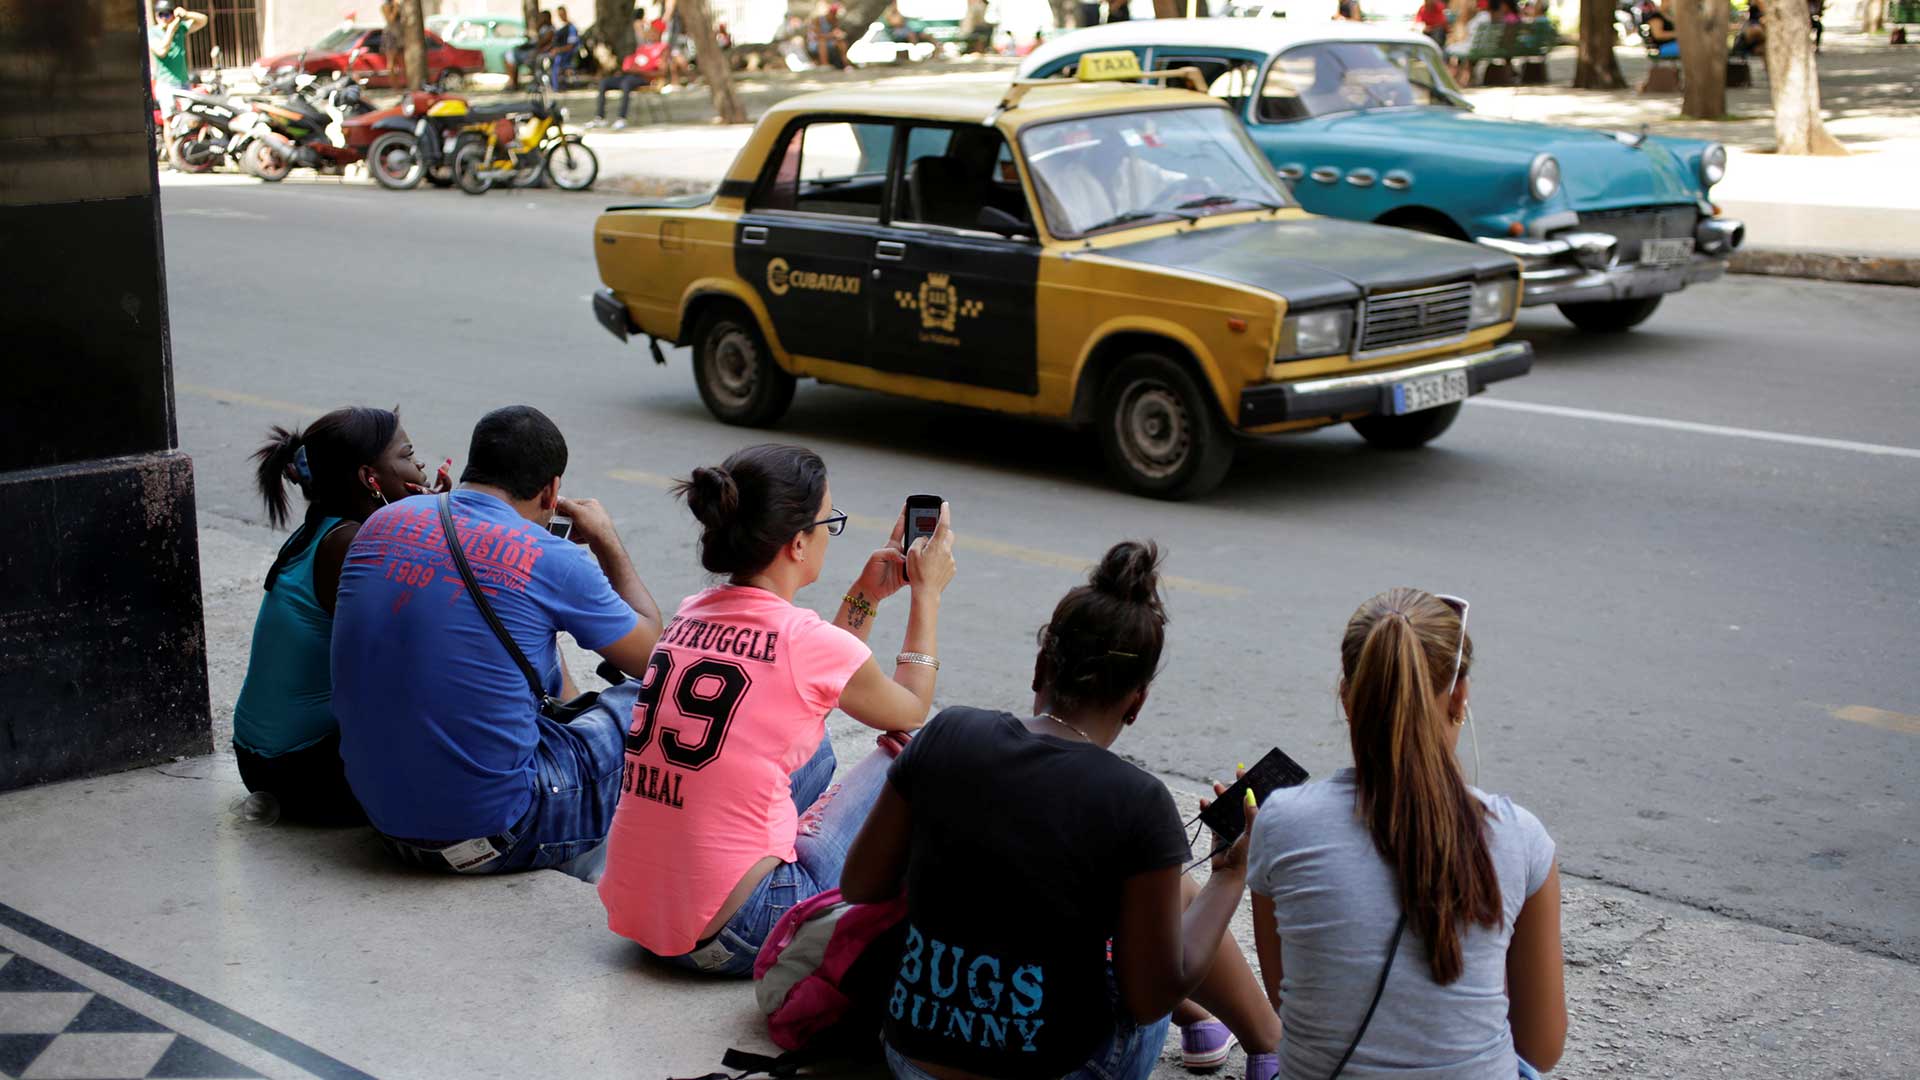 and WiFi in Cuba during Your Cuba Trip Cuba Travel & Tourism